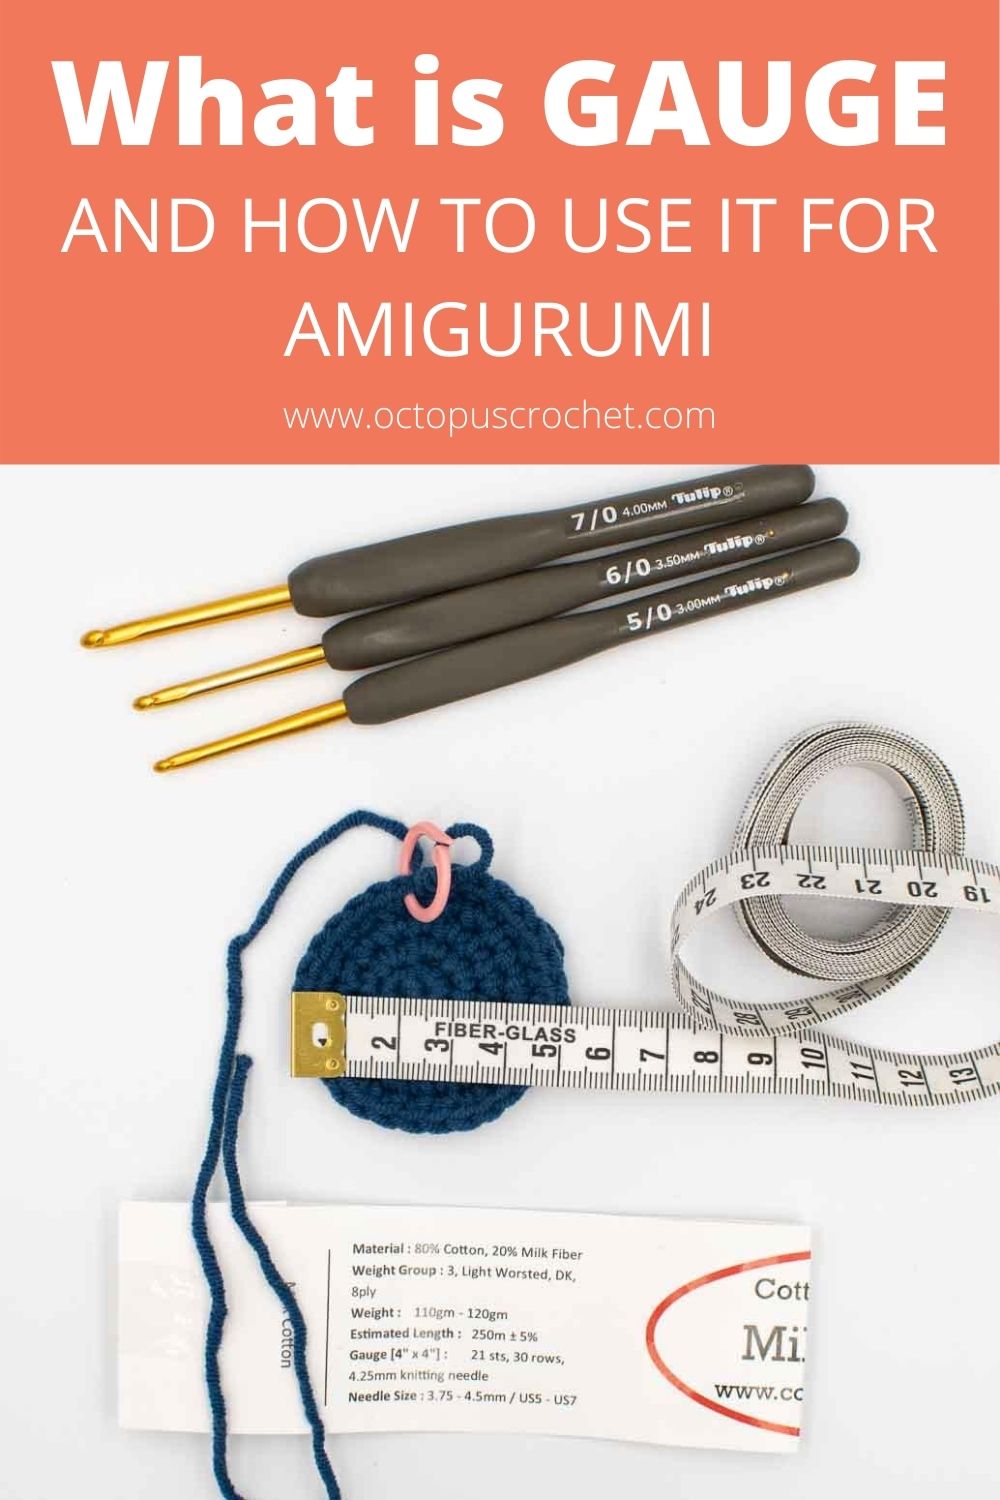 What-is-gauge-for-amigurumi-pin